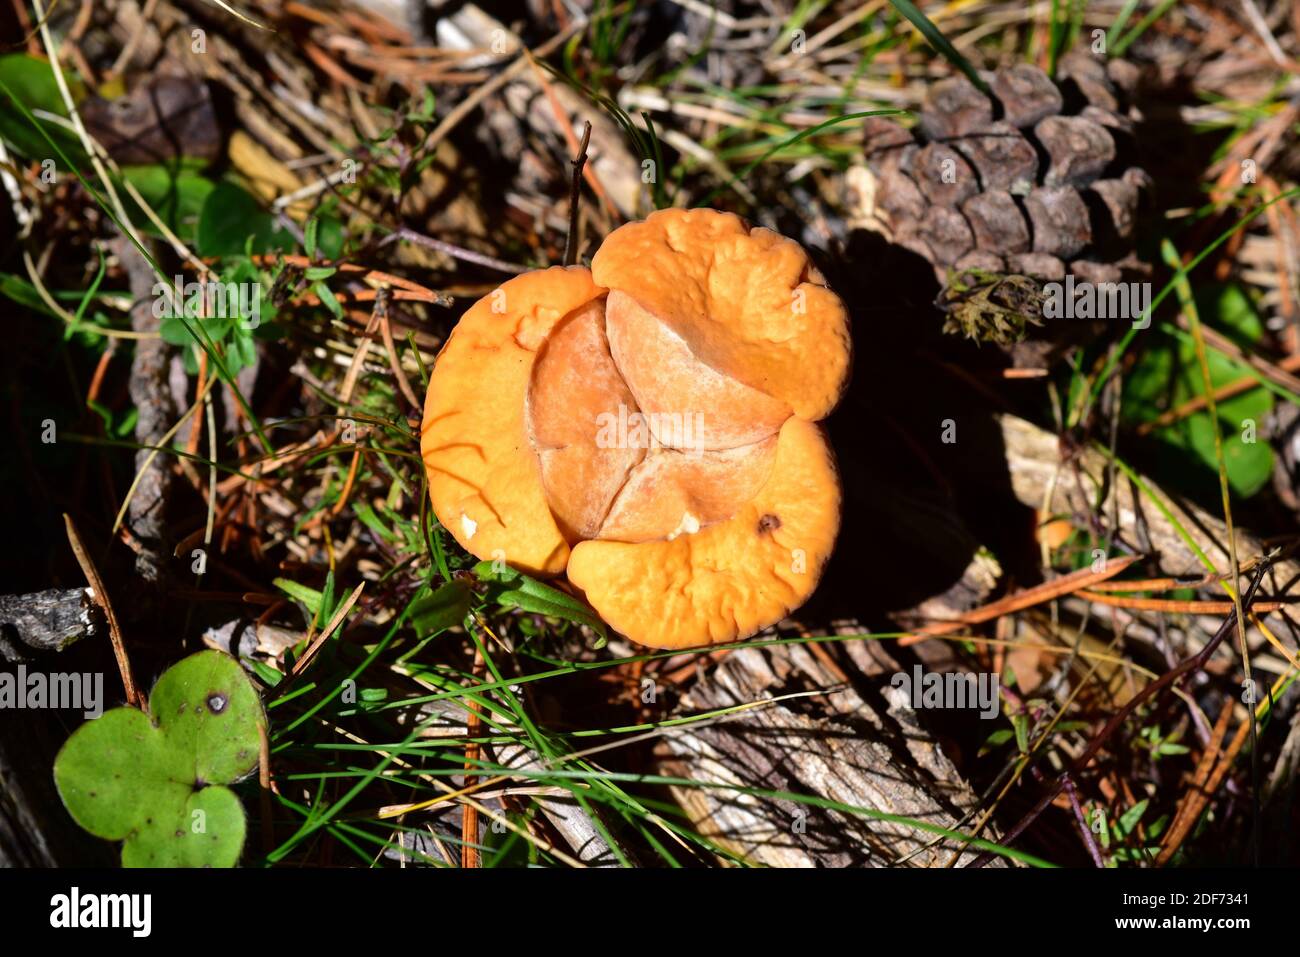 Club coral (Clavariadelphus truncatus) is an edible mushroom that grows on coniferous forests. This photo was taken near Mosqueruela, Teruel Stock Photo